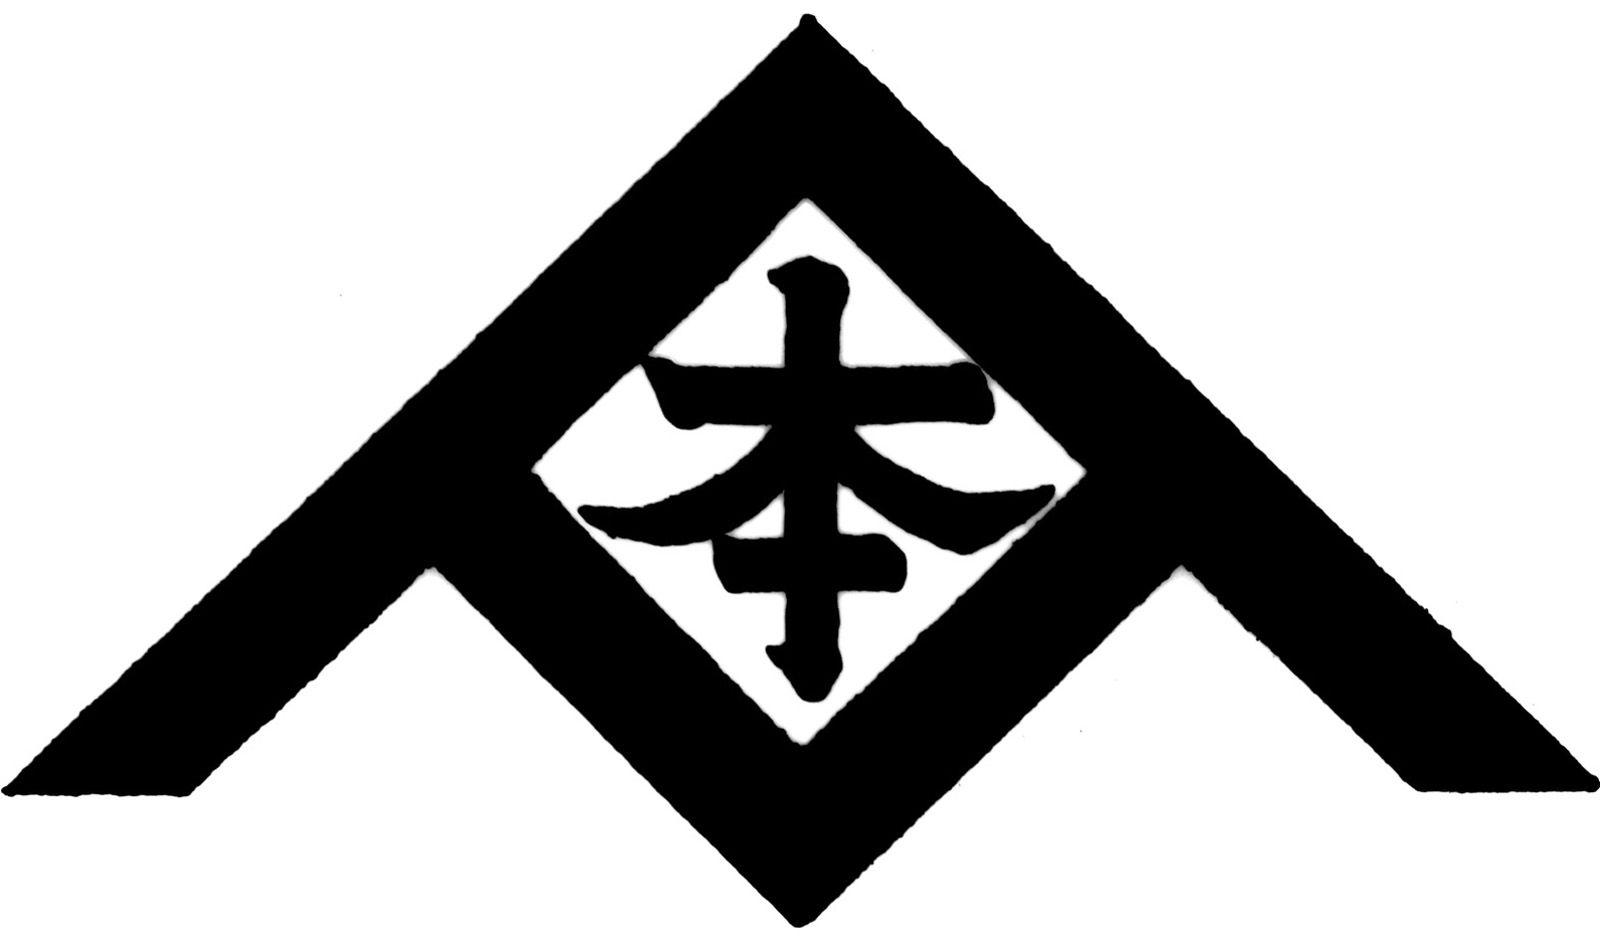 Takeda Logo - Our Corporate Symbols|Company Information|Takeda Pharmaceutical ...